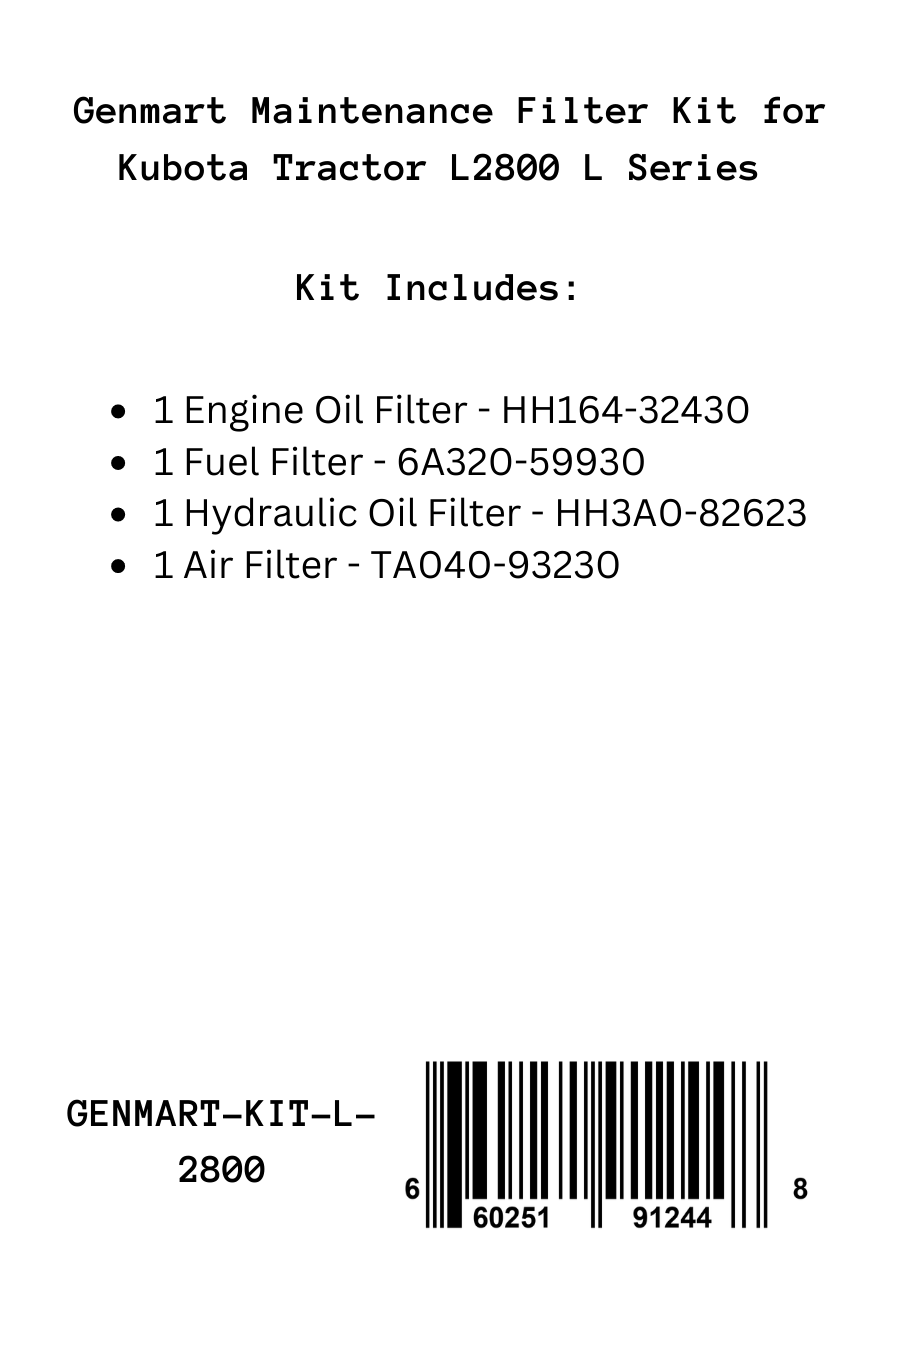 Genmart Maintenance Kit for Kubota Tractor L2800 L Series